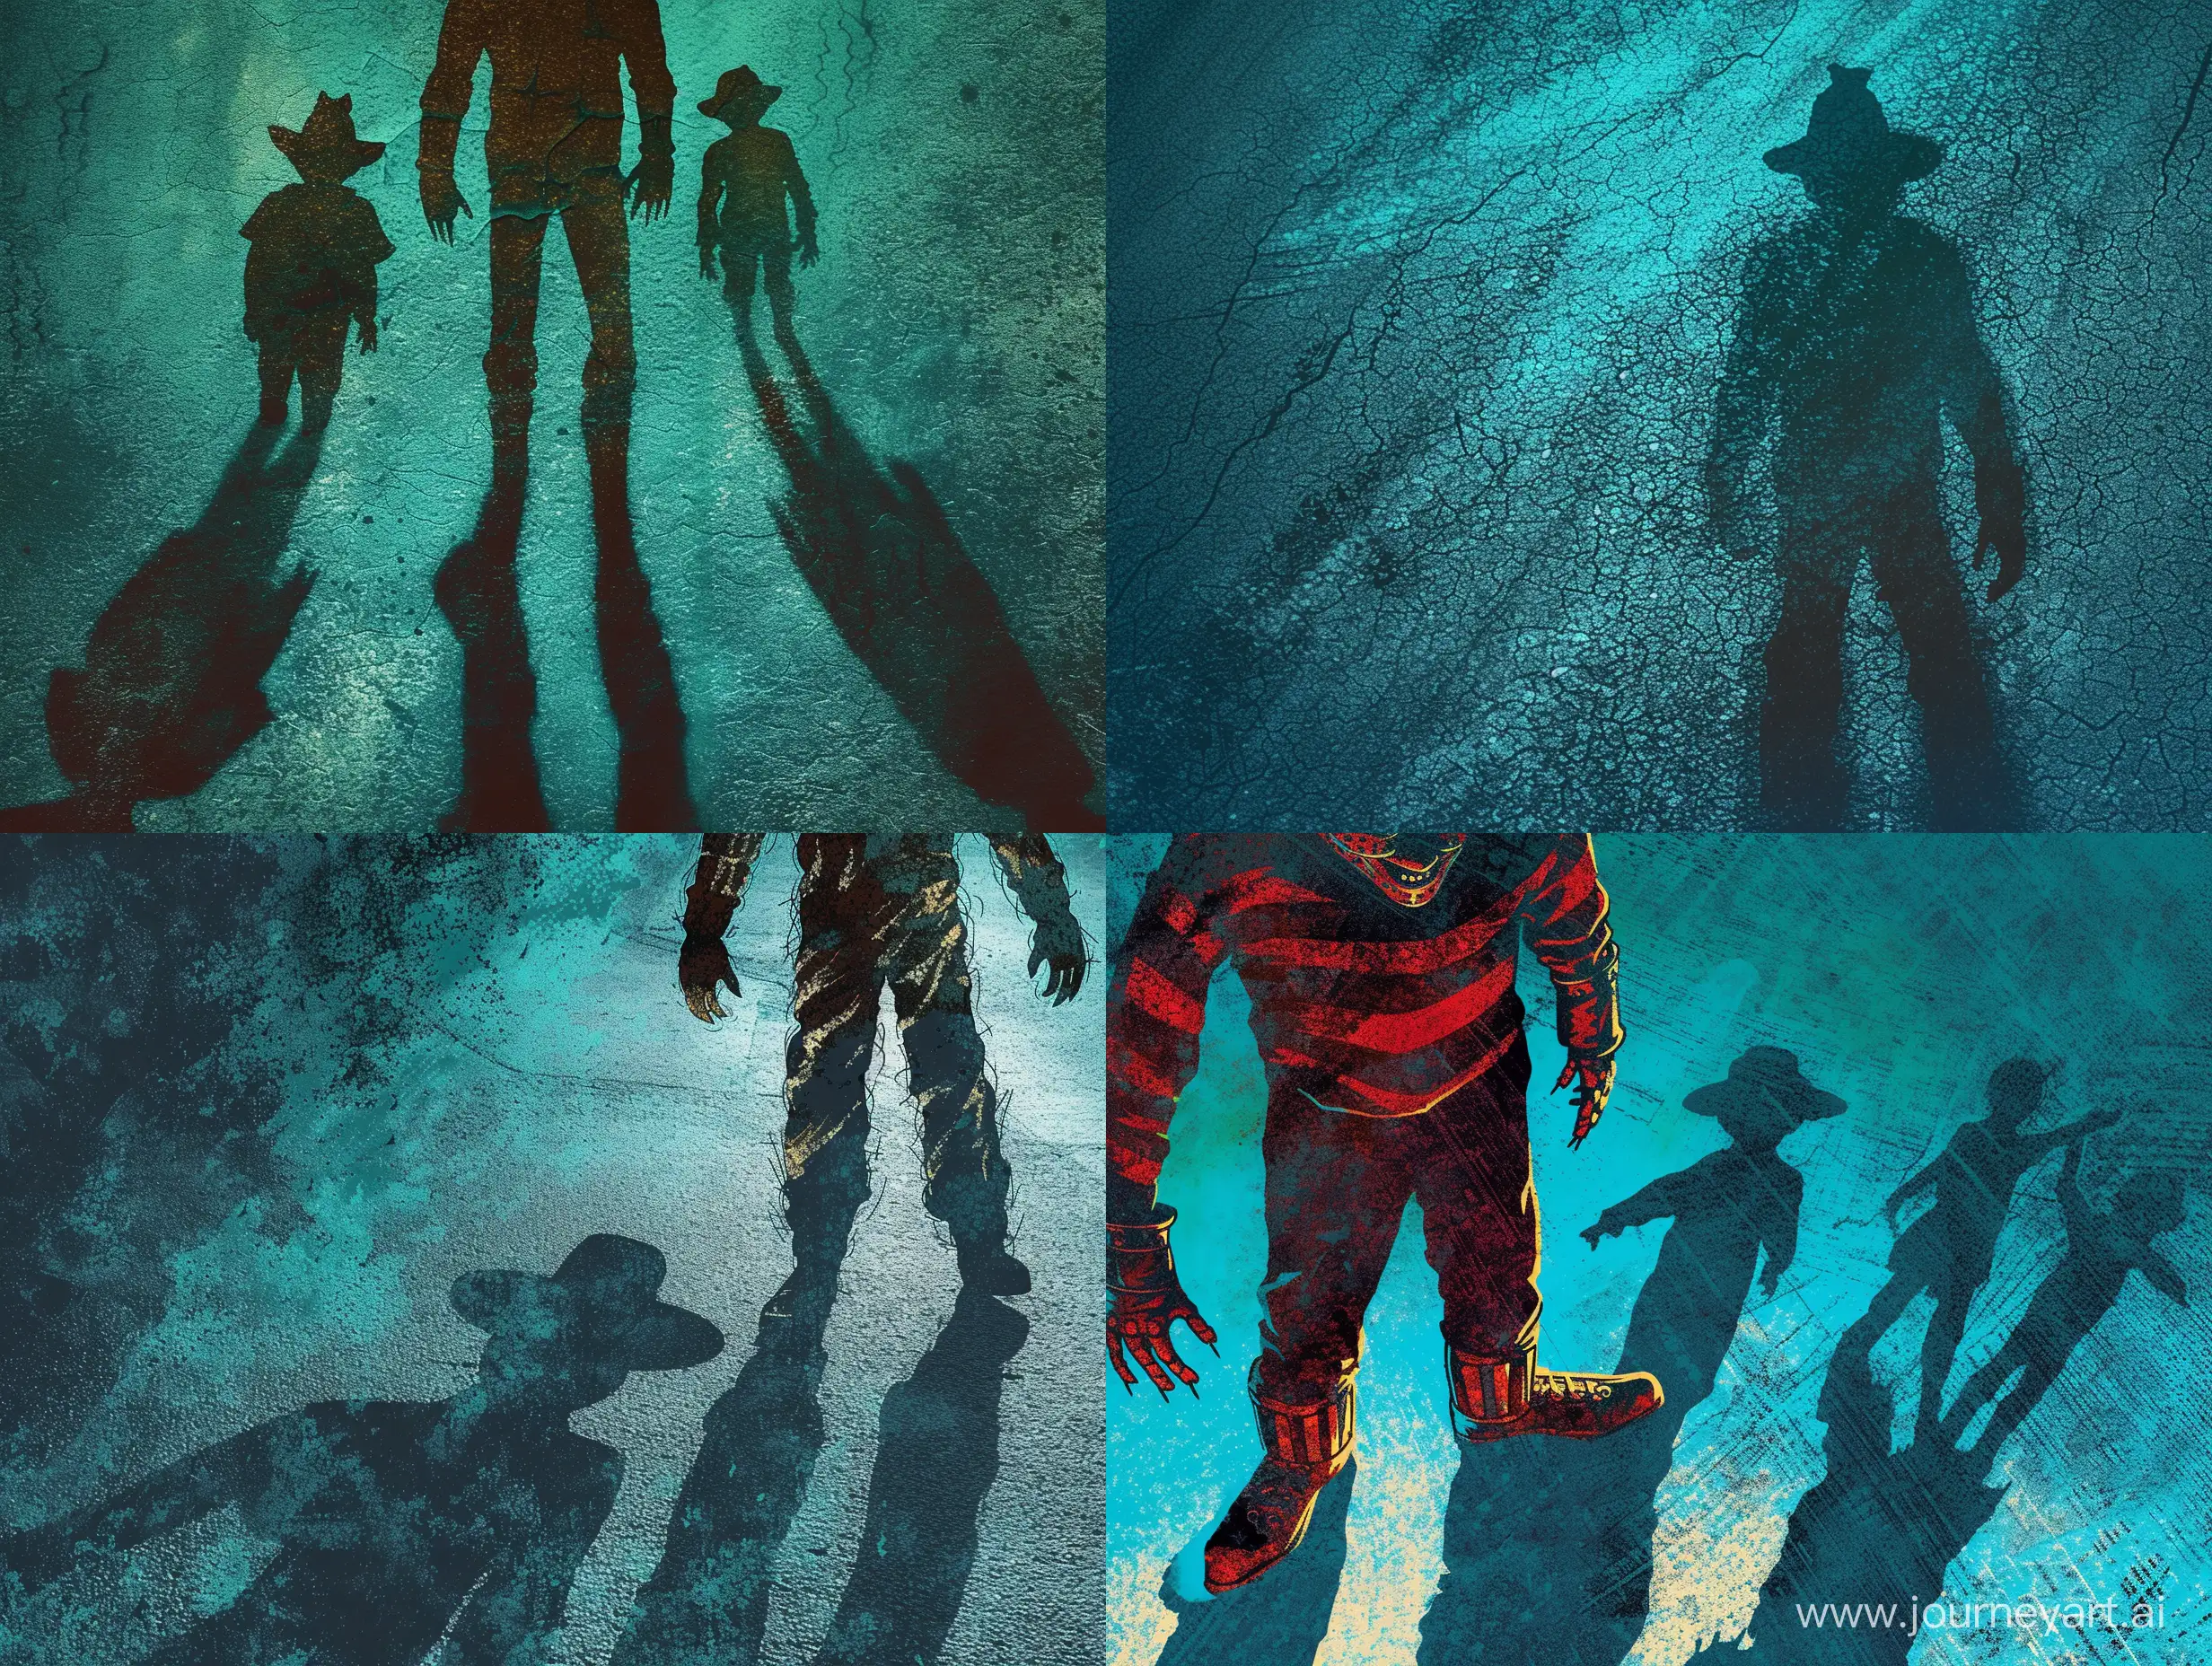 Mystical-Horror-Film-Poster-Shadow-of-Freddy-Krueger-and-Children-in-TurquoiseBlue-Moonlight